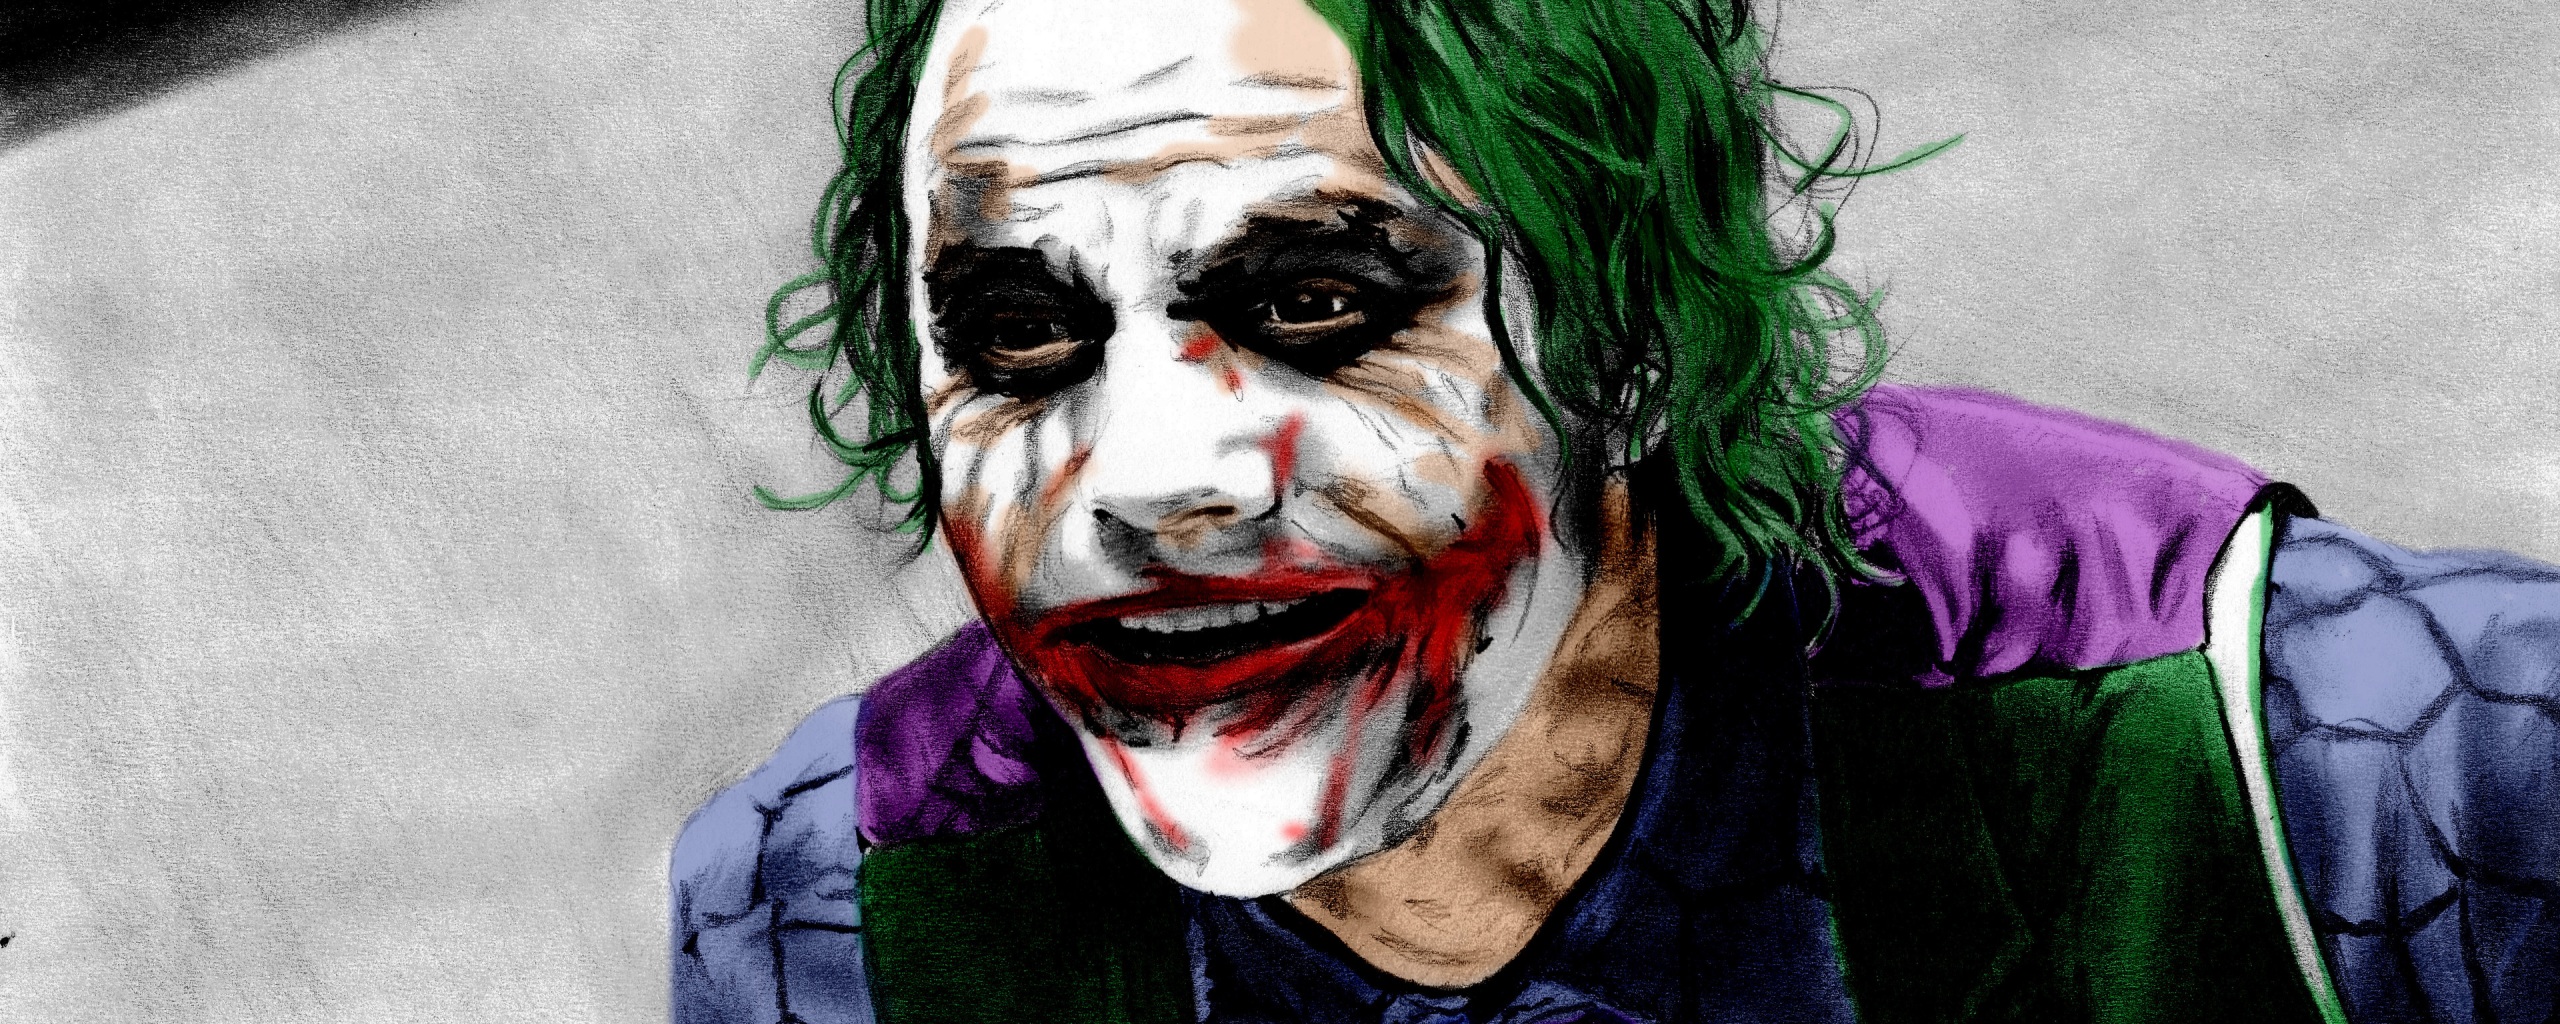 Joker The Dark Knight - 4k Wallpapers - 40.000+ ipad wallpapers 4k - 4k ...